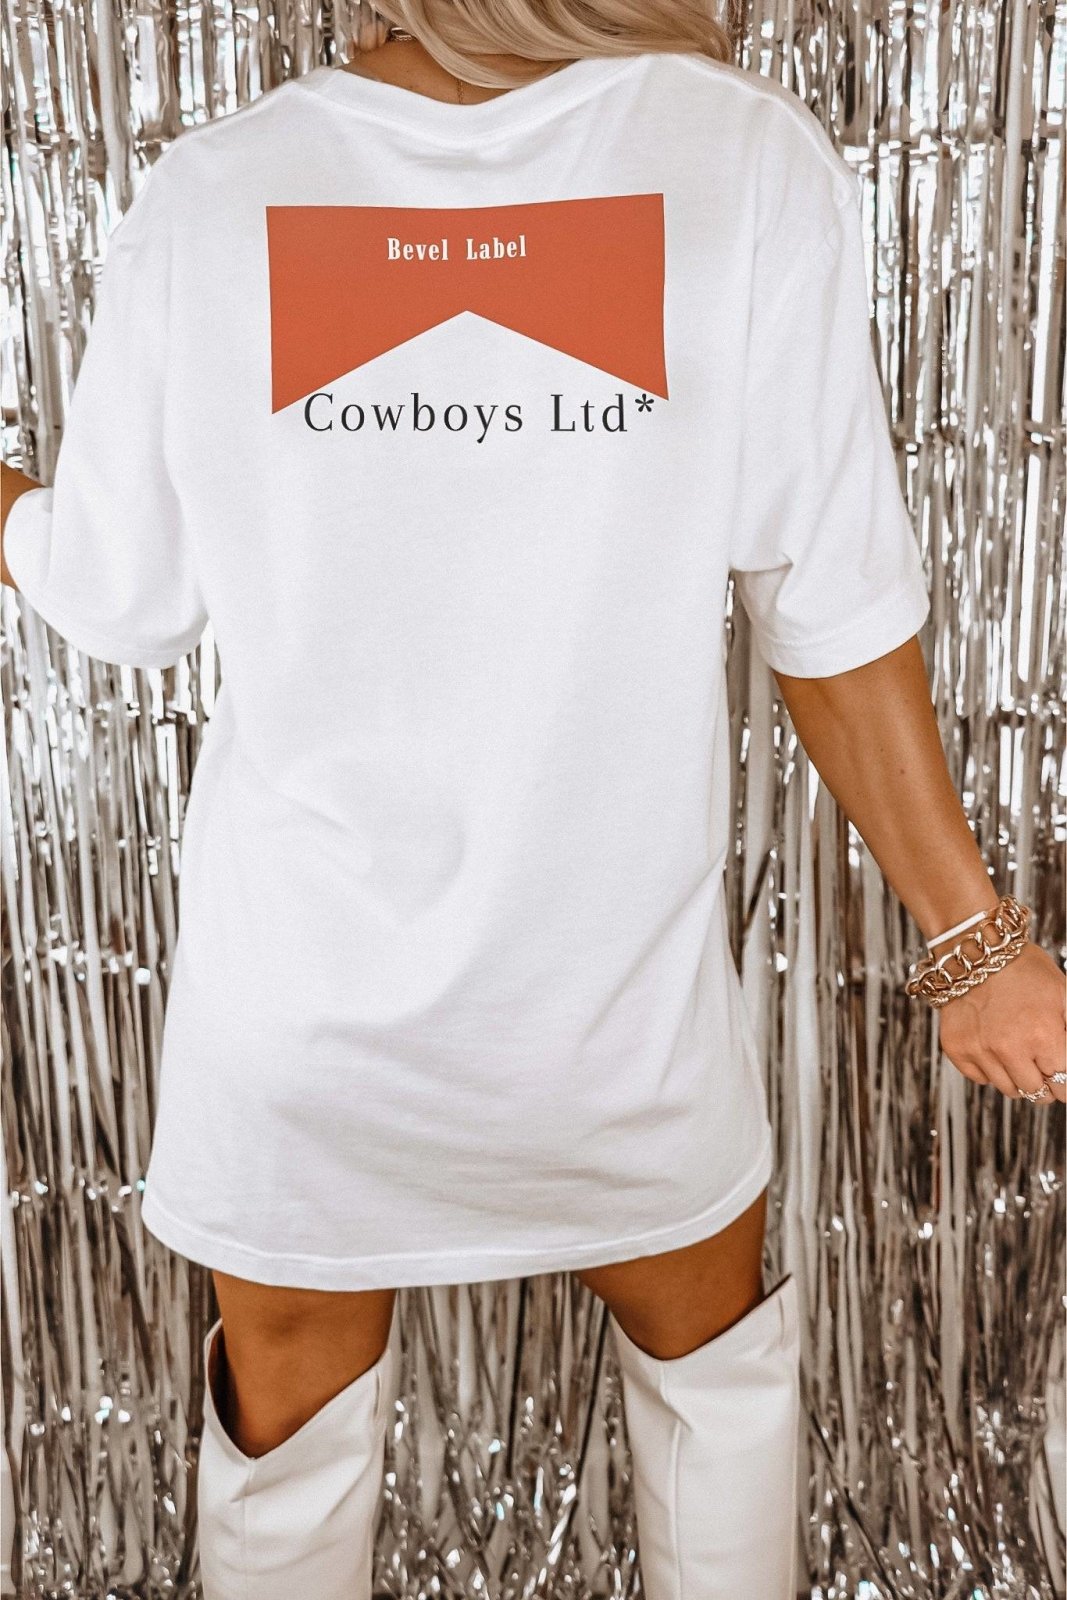 Cotton Cowboys LTD* T-shirt / Dress - tee dress